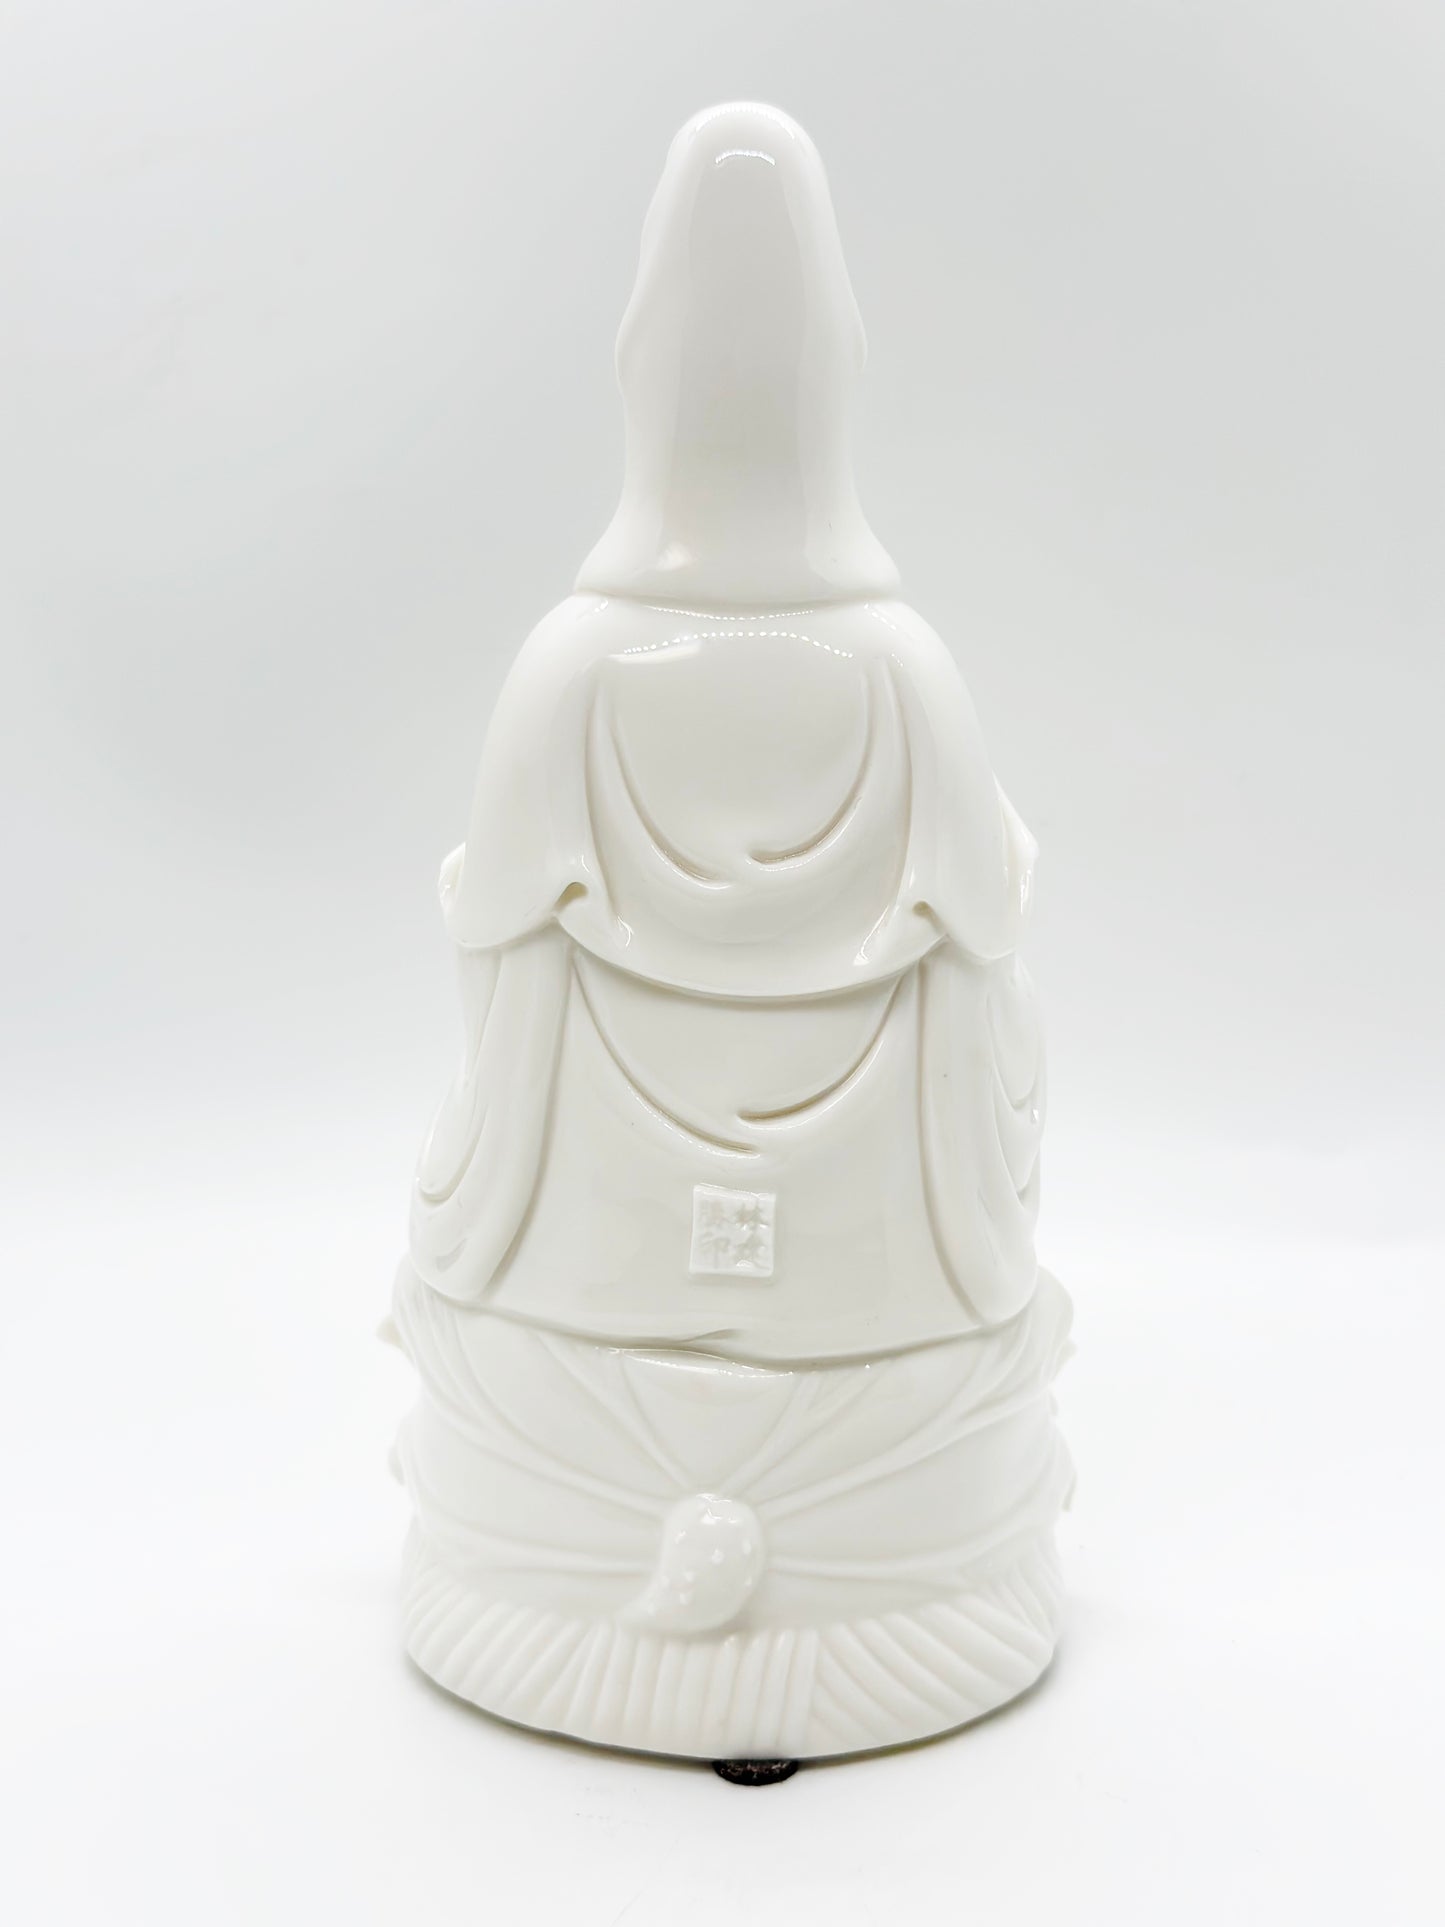 16622 - Kuan Yin Sitting on Lotus - 7 1/4 Inches Height